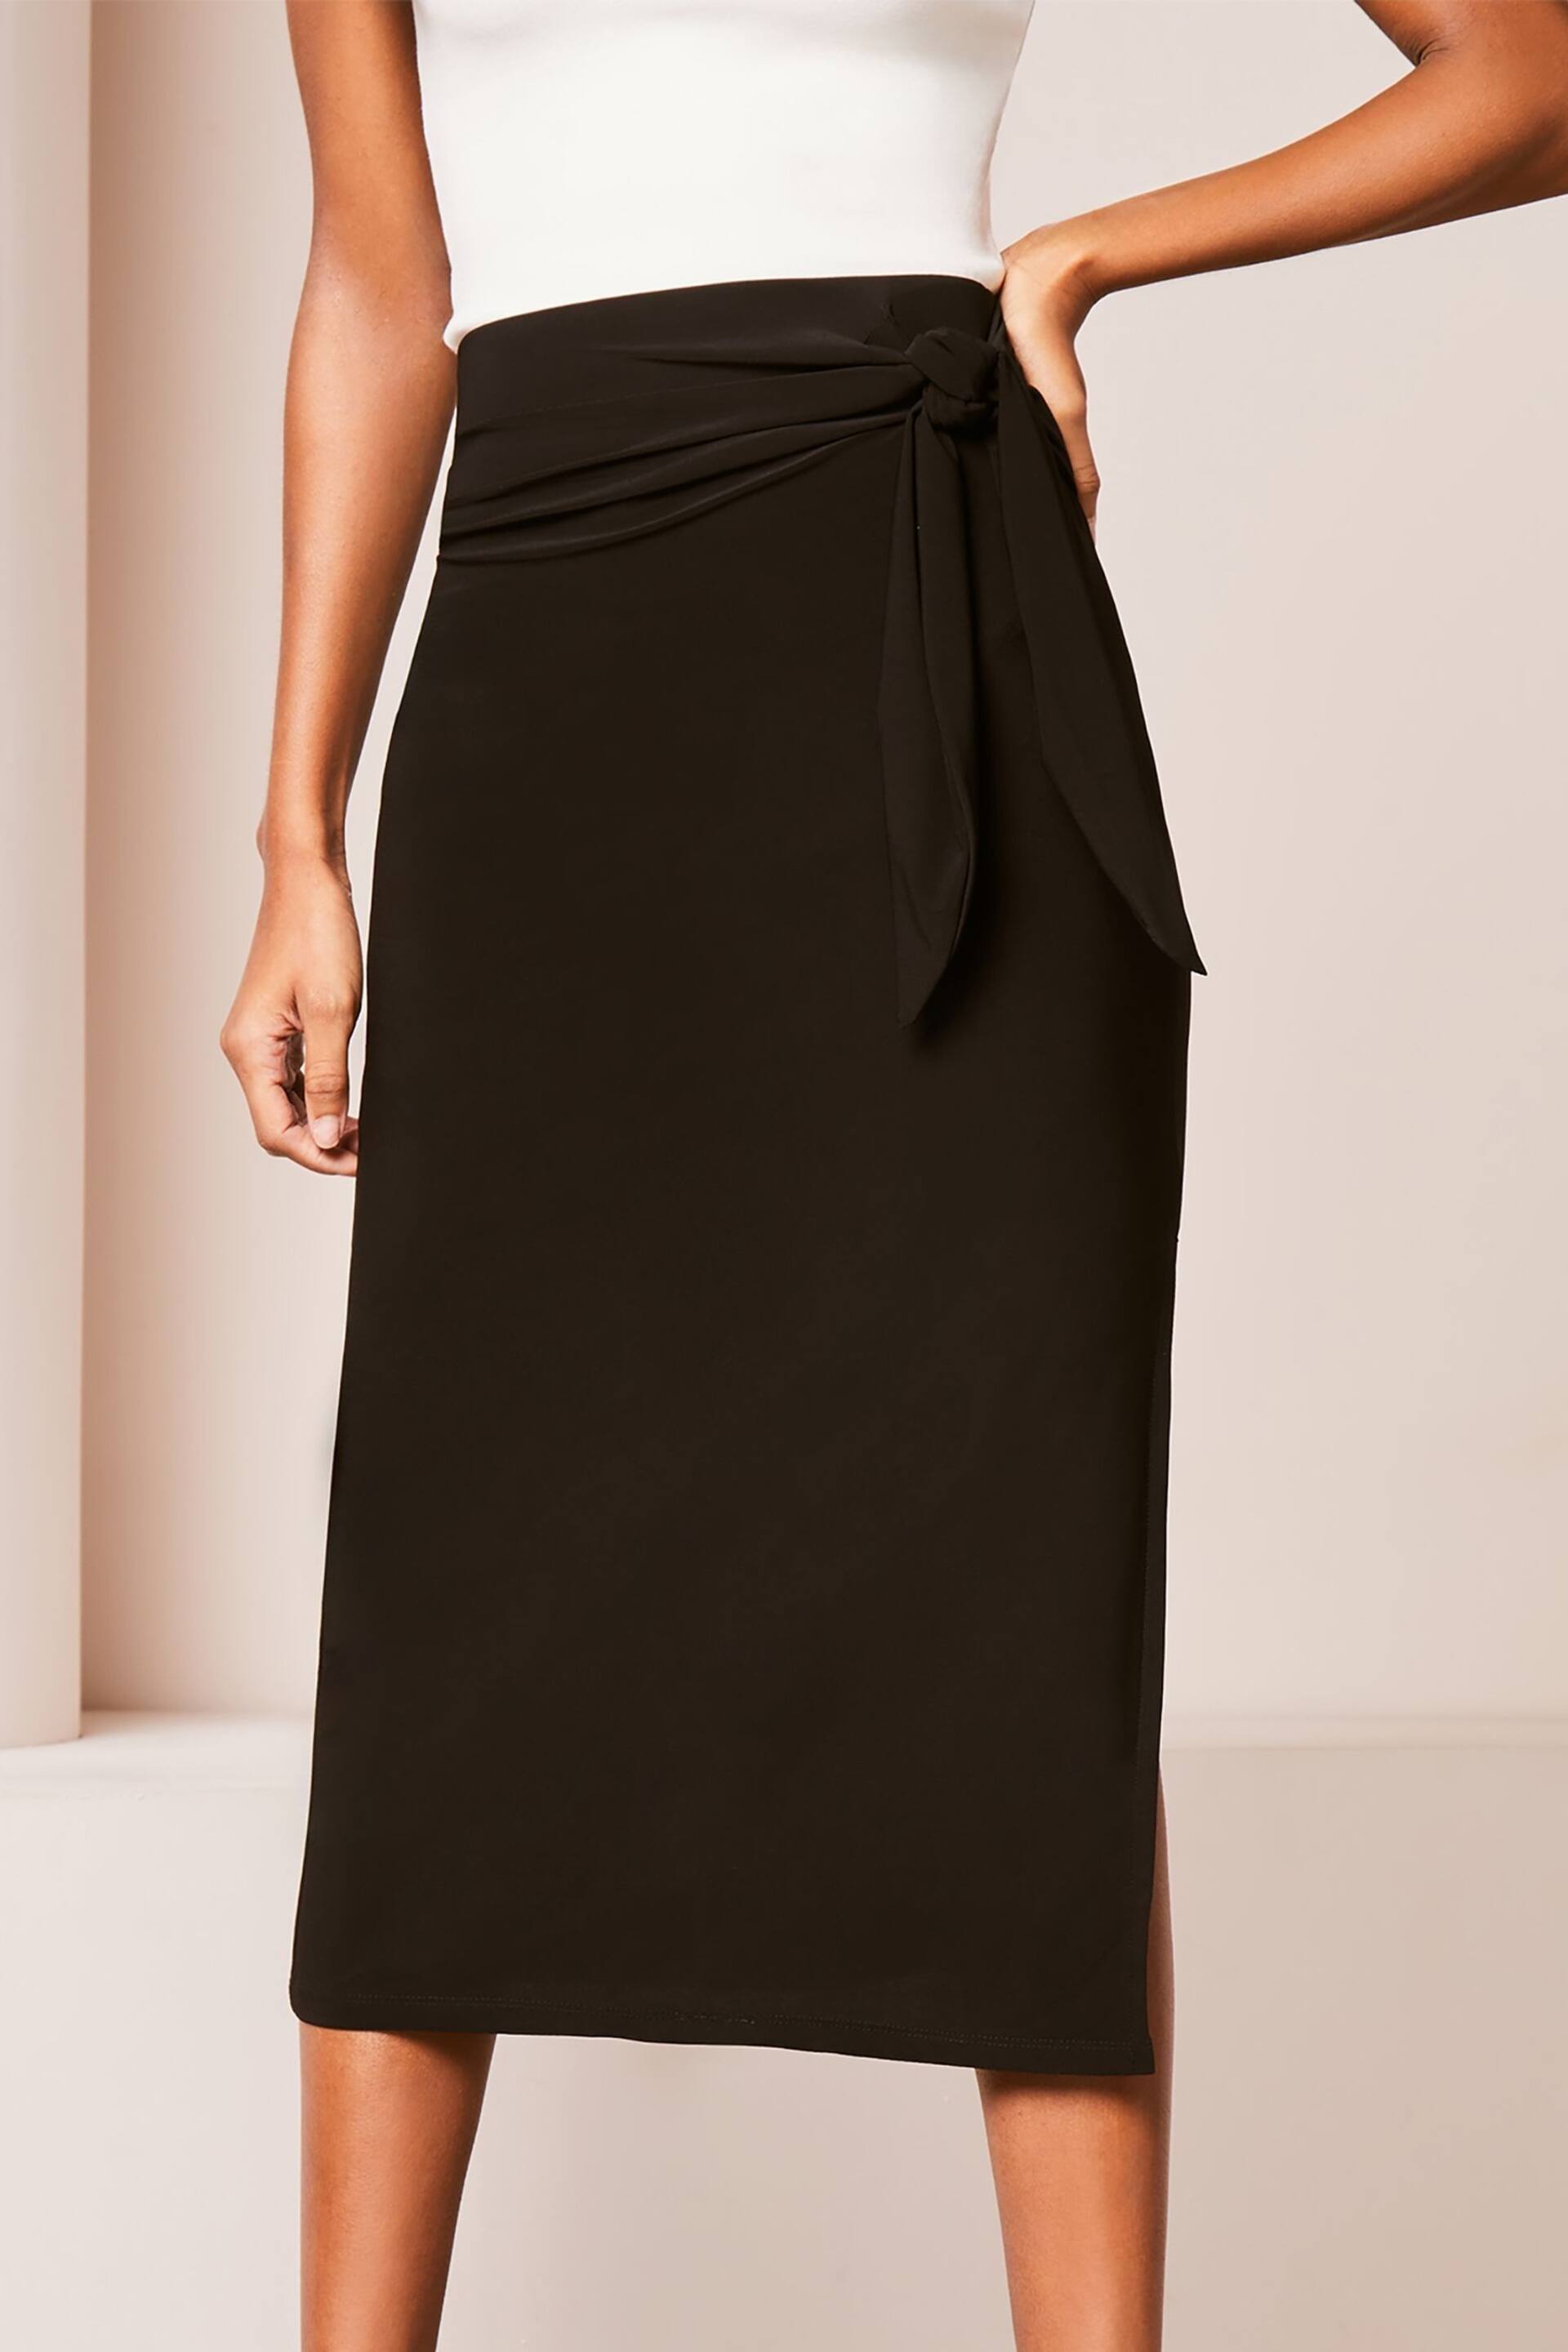 Lipsy Black Petite Wrap Midi Skirt - Image 1 of 4